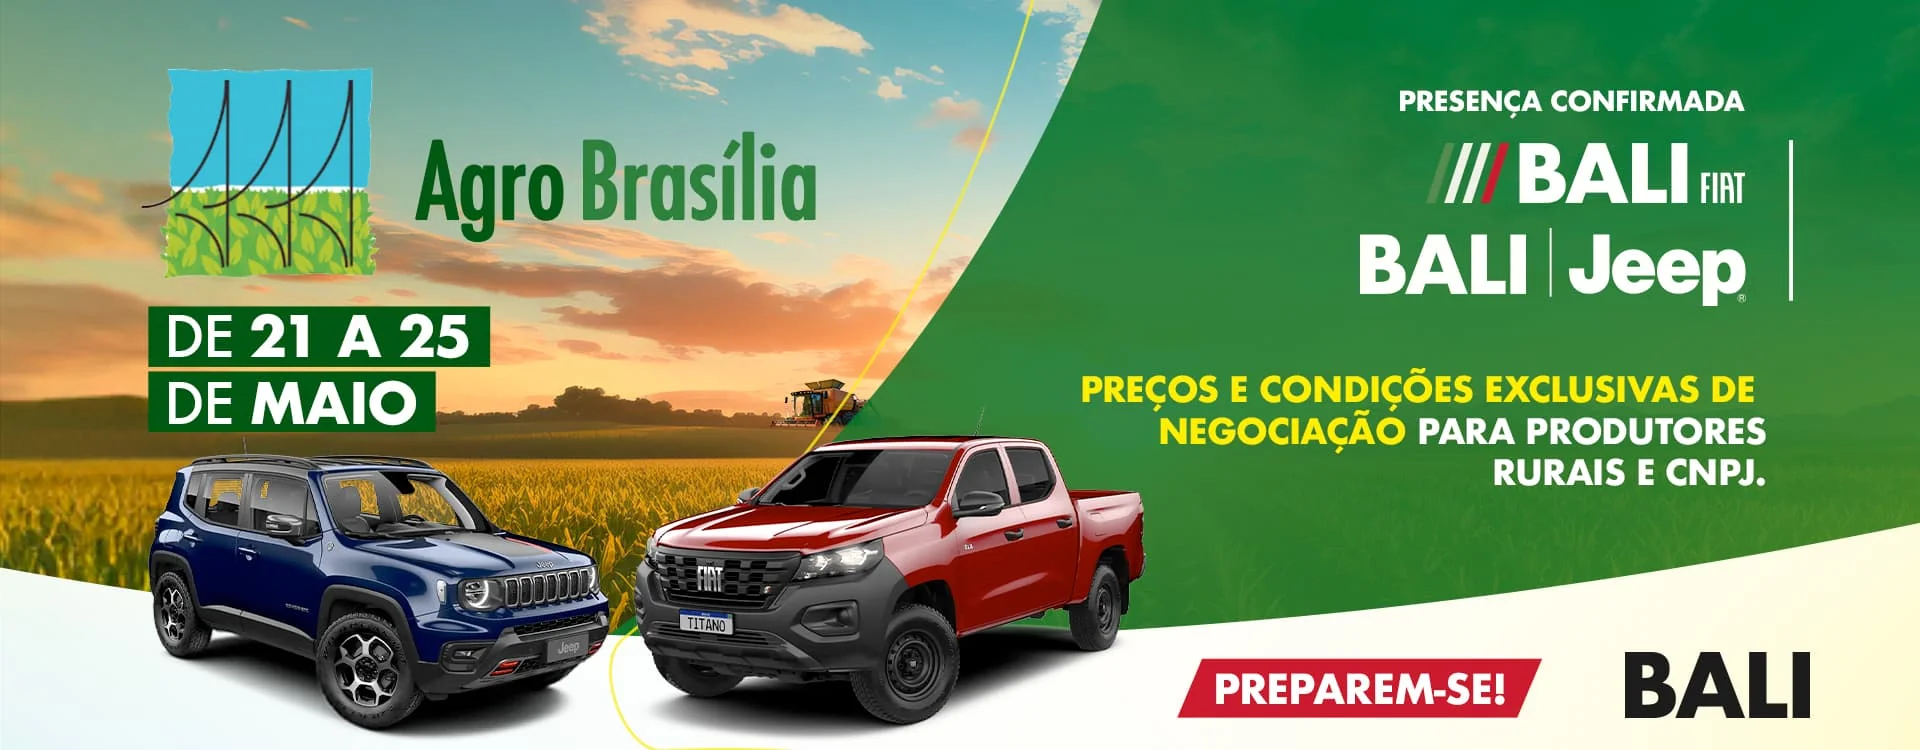 Agro Brasília